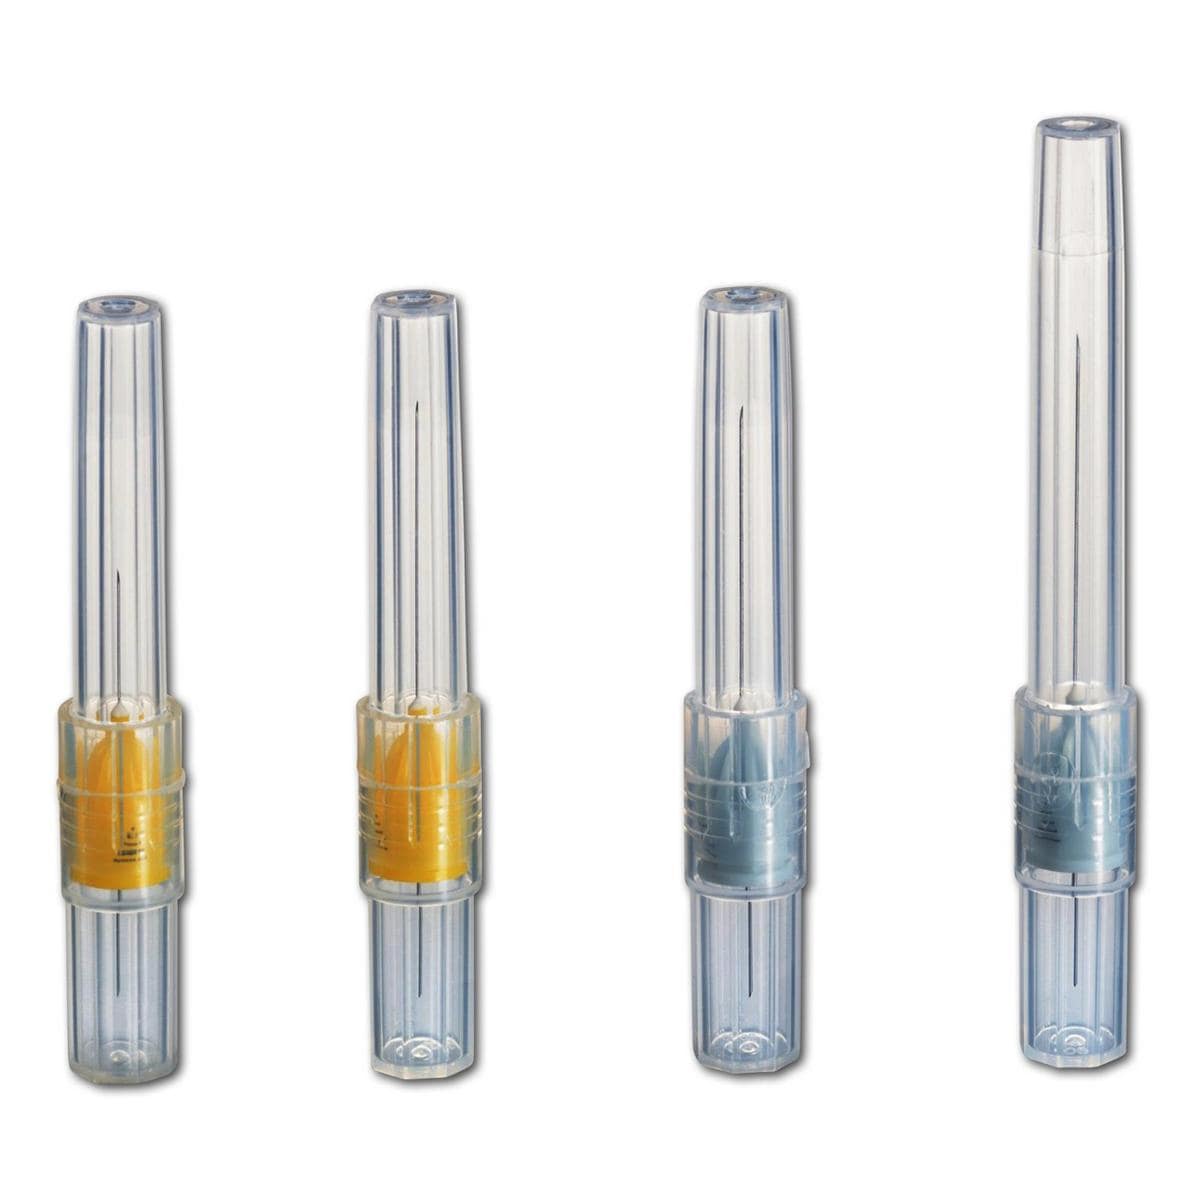 3M Inject Needles / Injektionskanülen - 27G, 0,4 x 25 mm, kurz, Packung 100 Stück